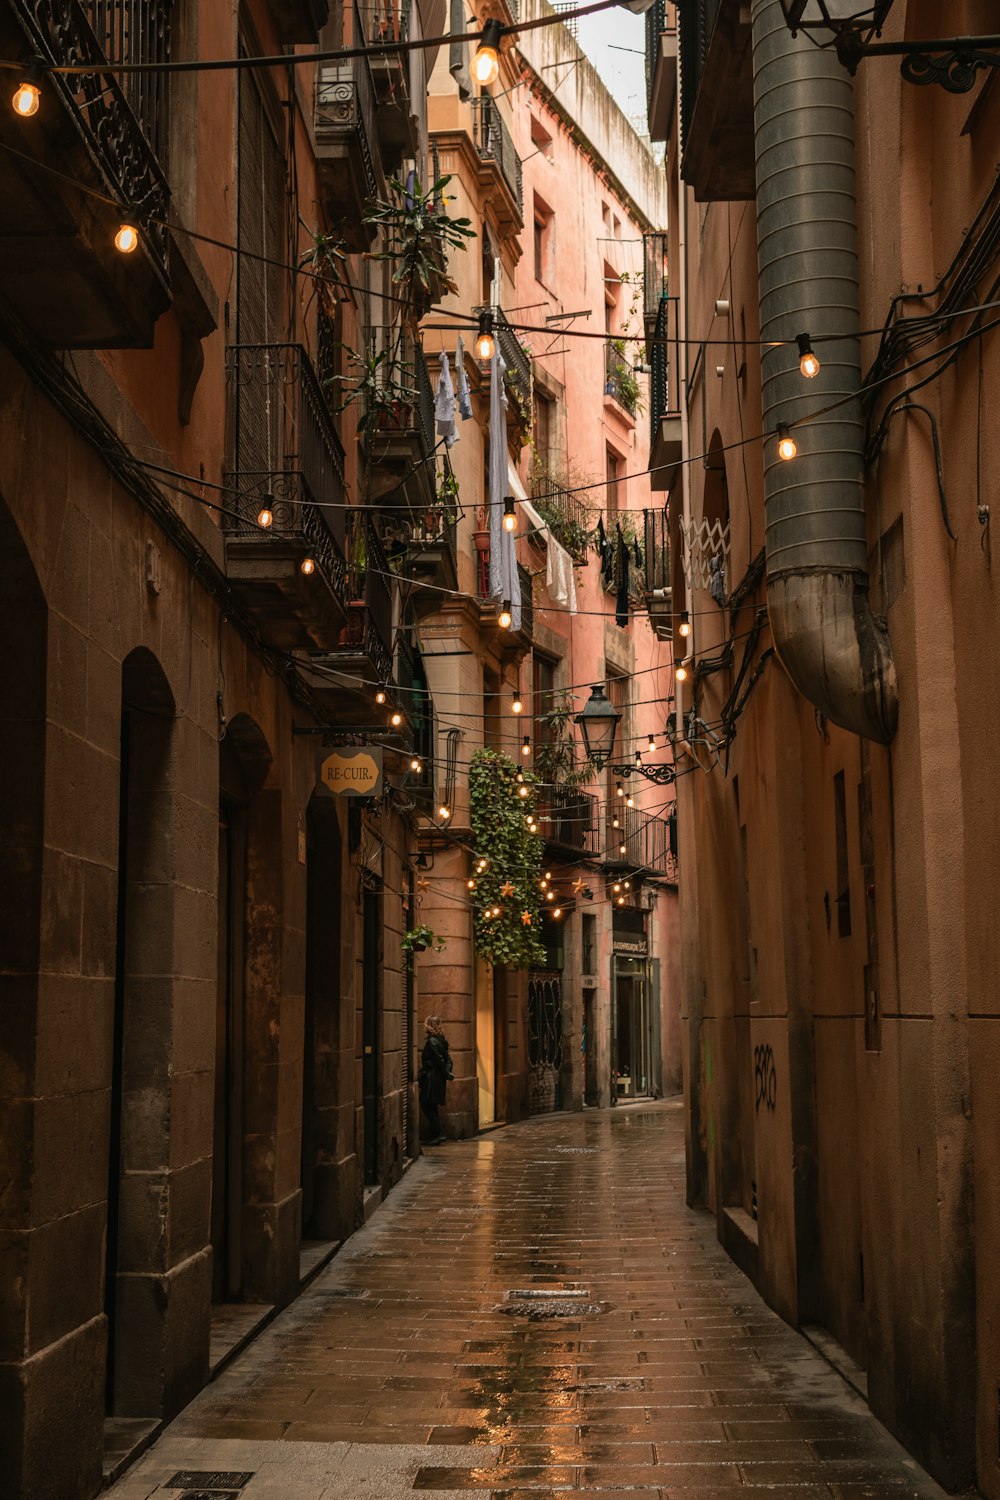 a narrow alleyway with a few people walking down it